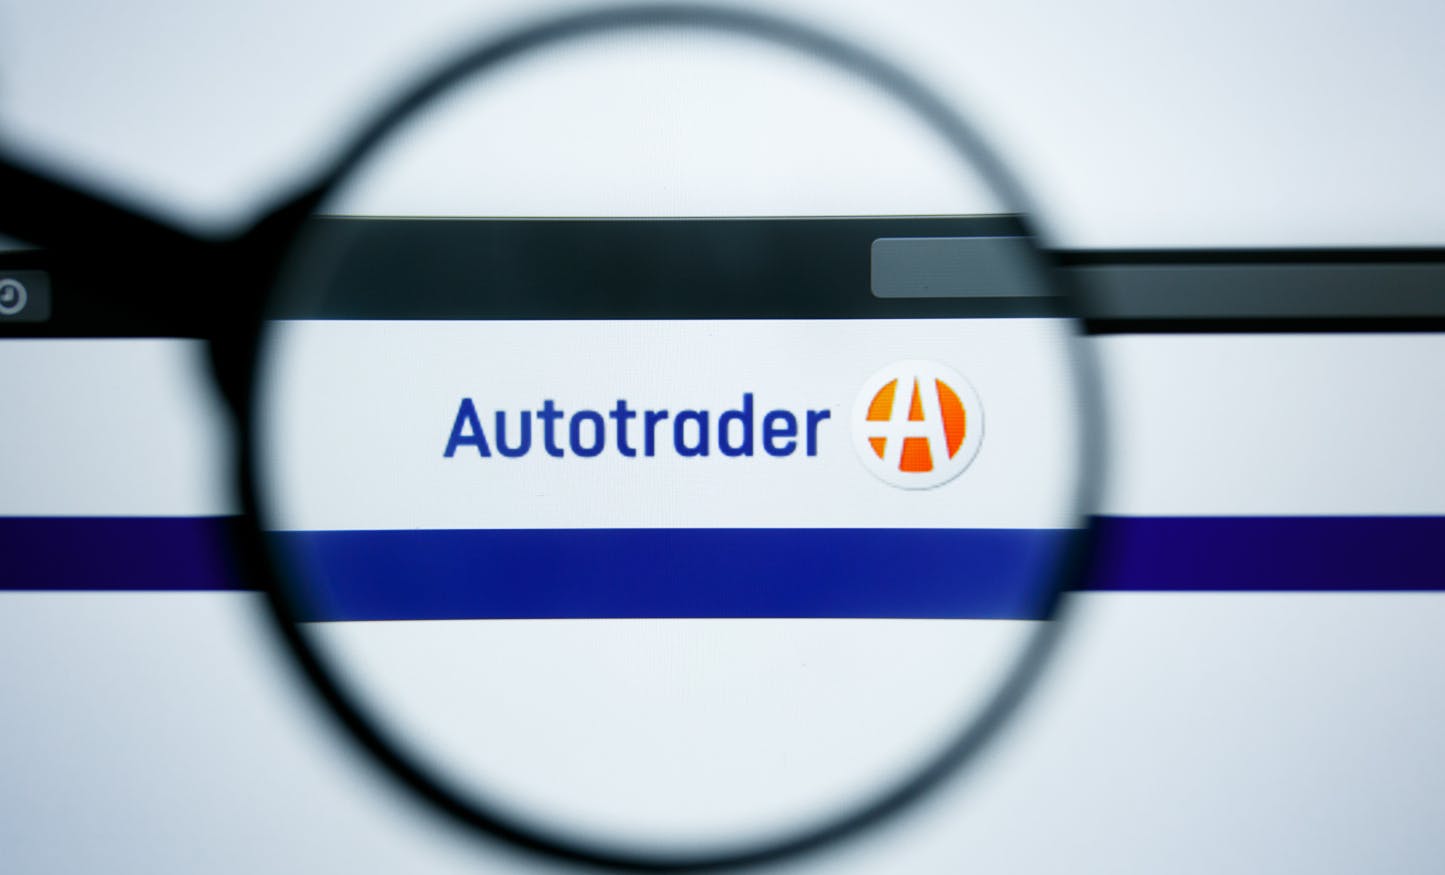 Autotrader.com: Dealership Services & Full Review